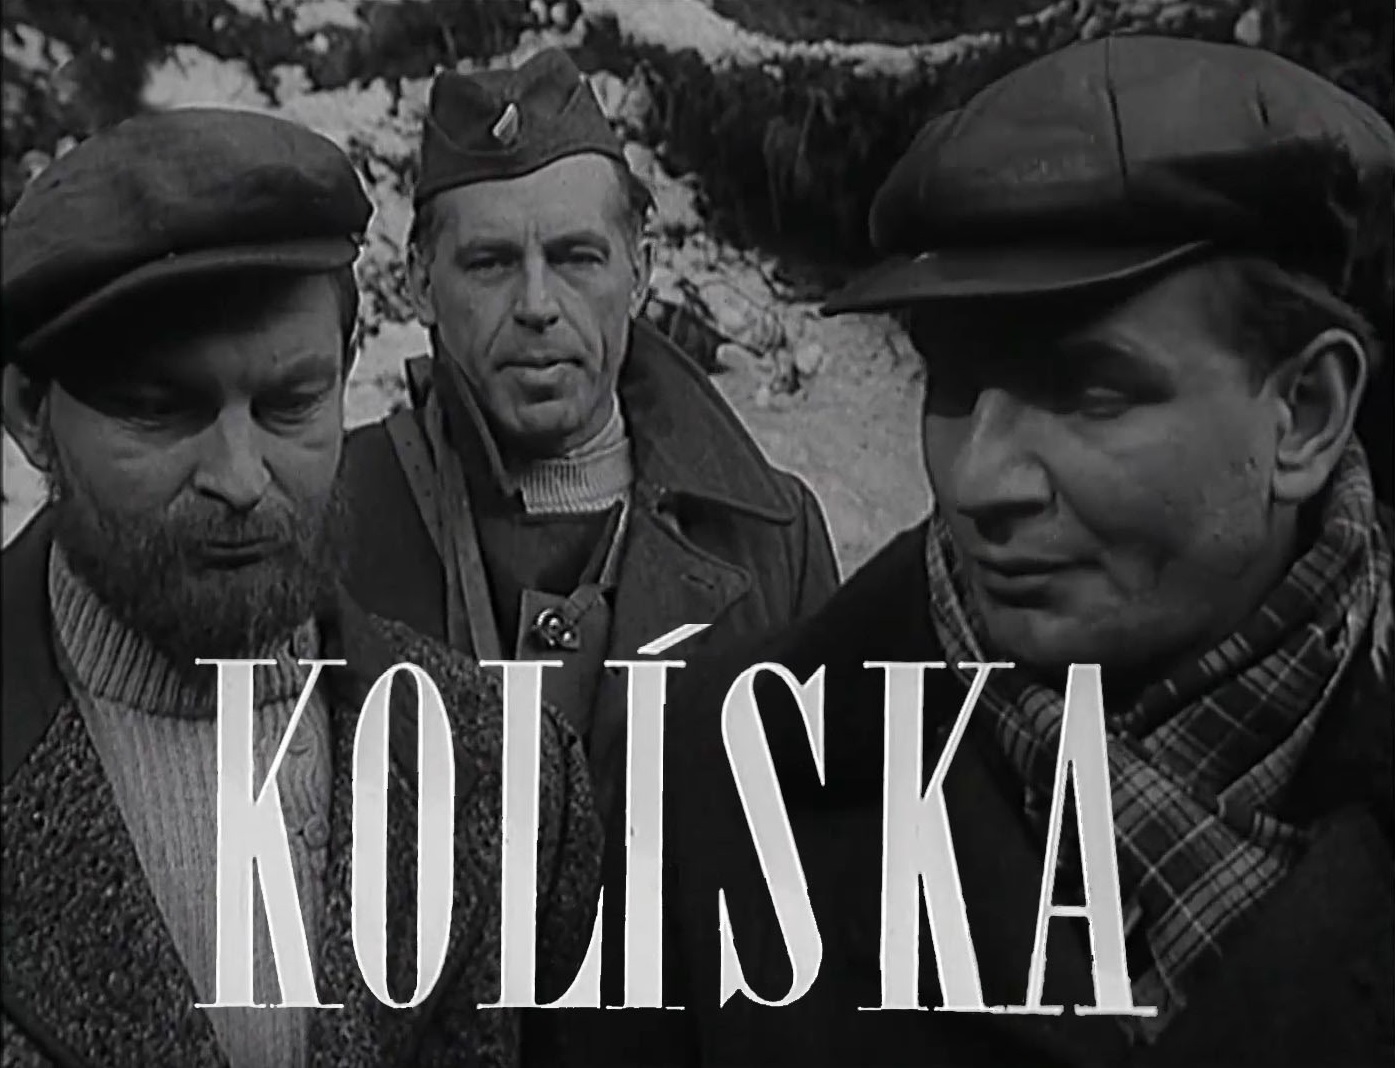 Stiahni si Filmy CZ/SK dabing Koliska (1964)(SK)[TvRip] = CSFD 63%